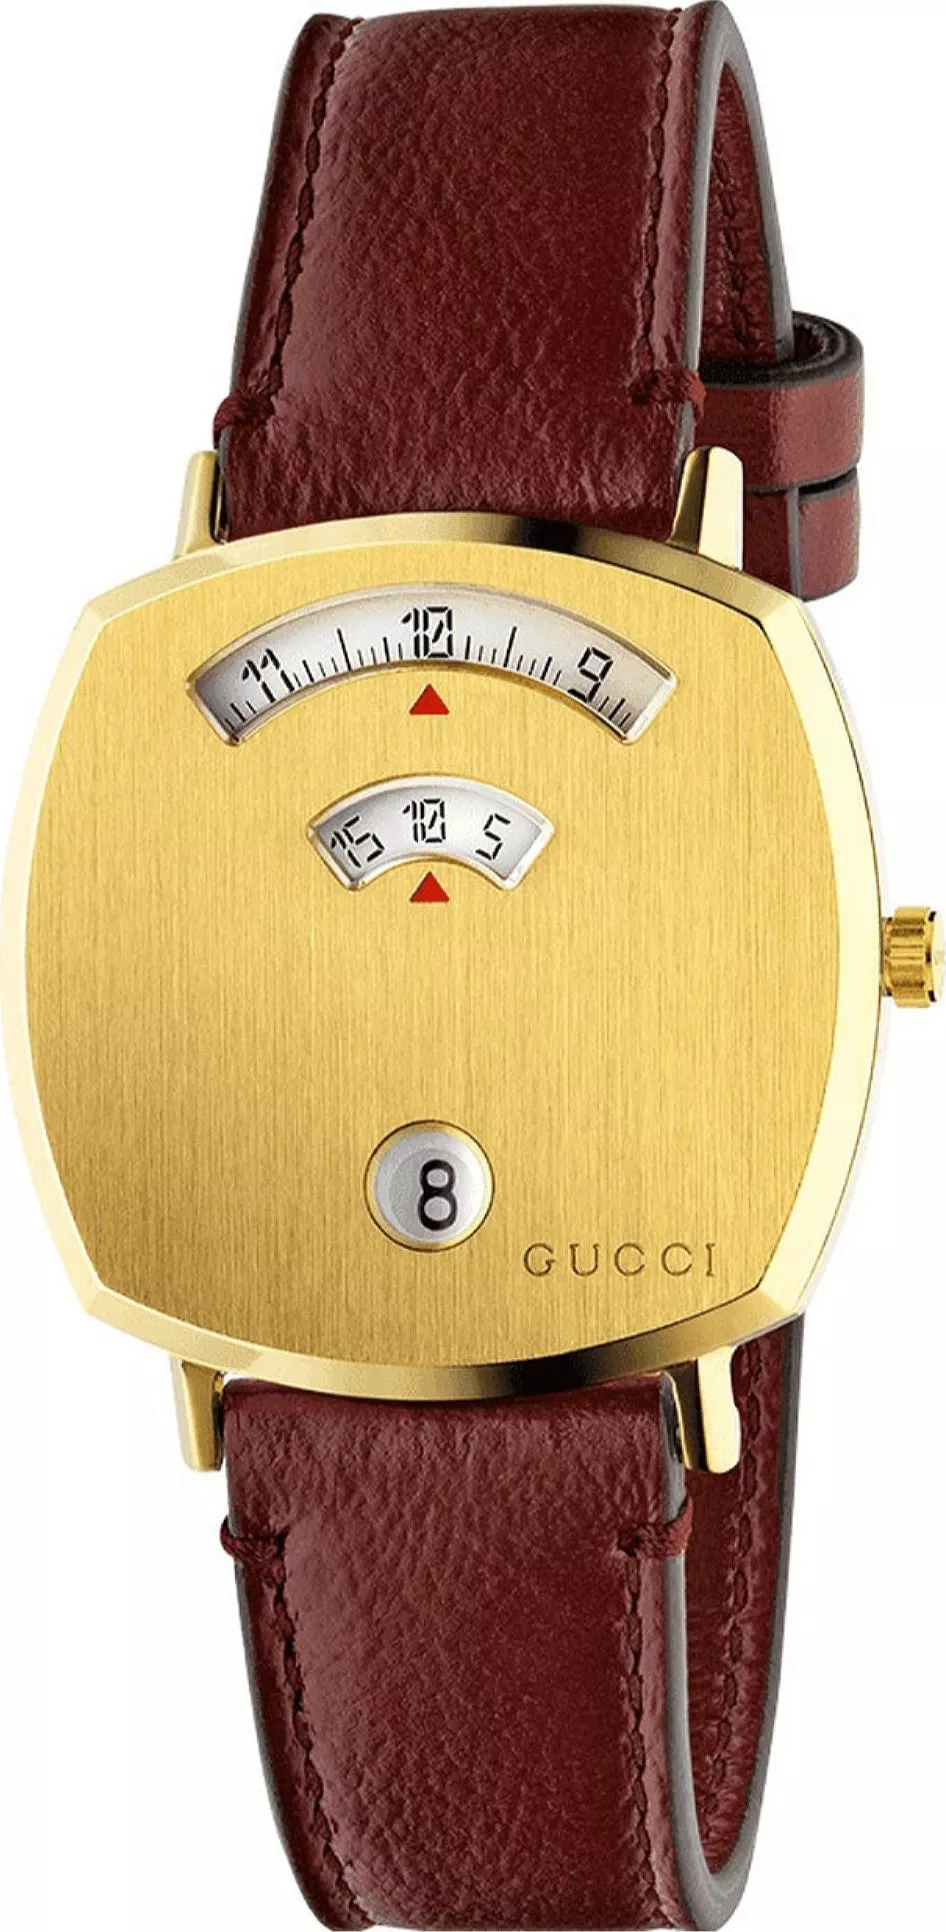 MSP: 95829 Gucci Grip Watch 35mm 46,580,000